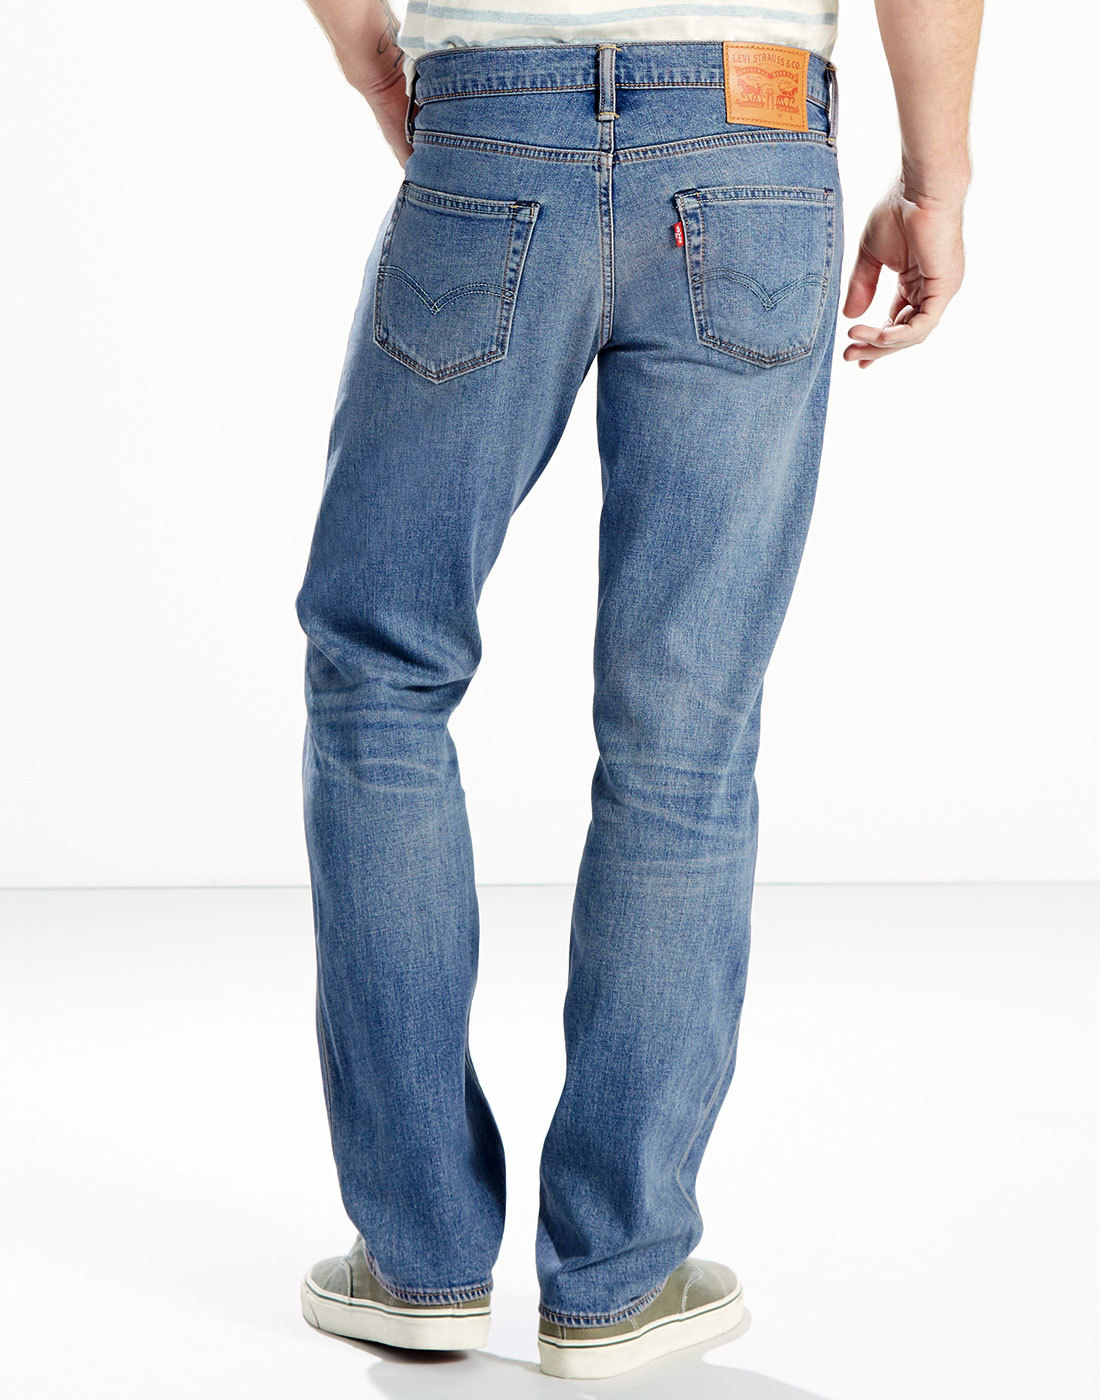 LEVI'S® 504 Retro Mod Regular Straight Denim Jeans in Greenville